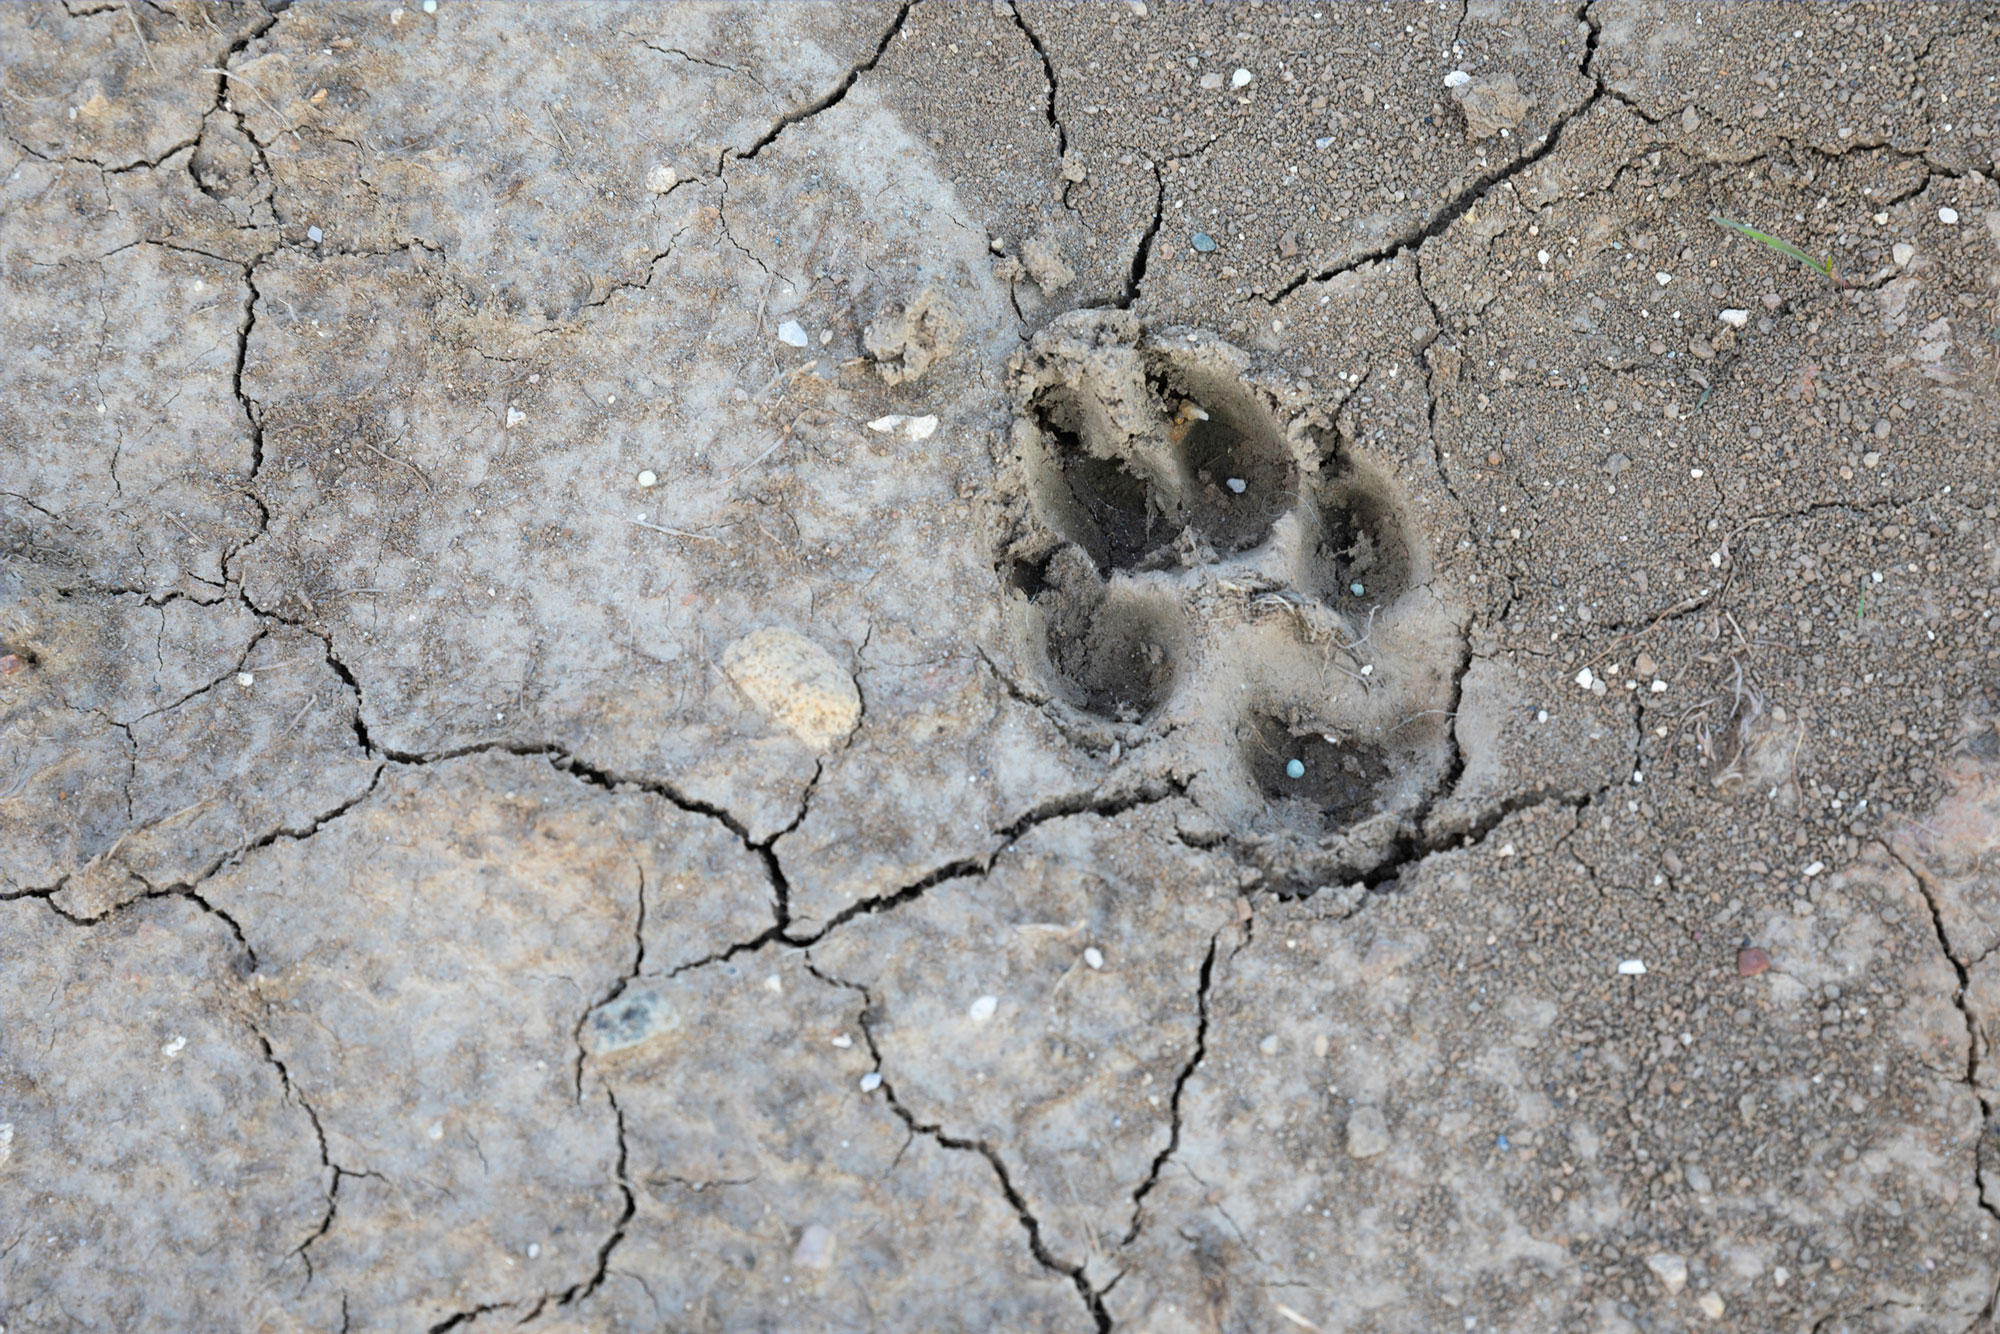 Coyote tracks in mud.